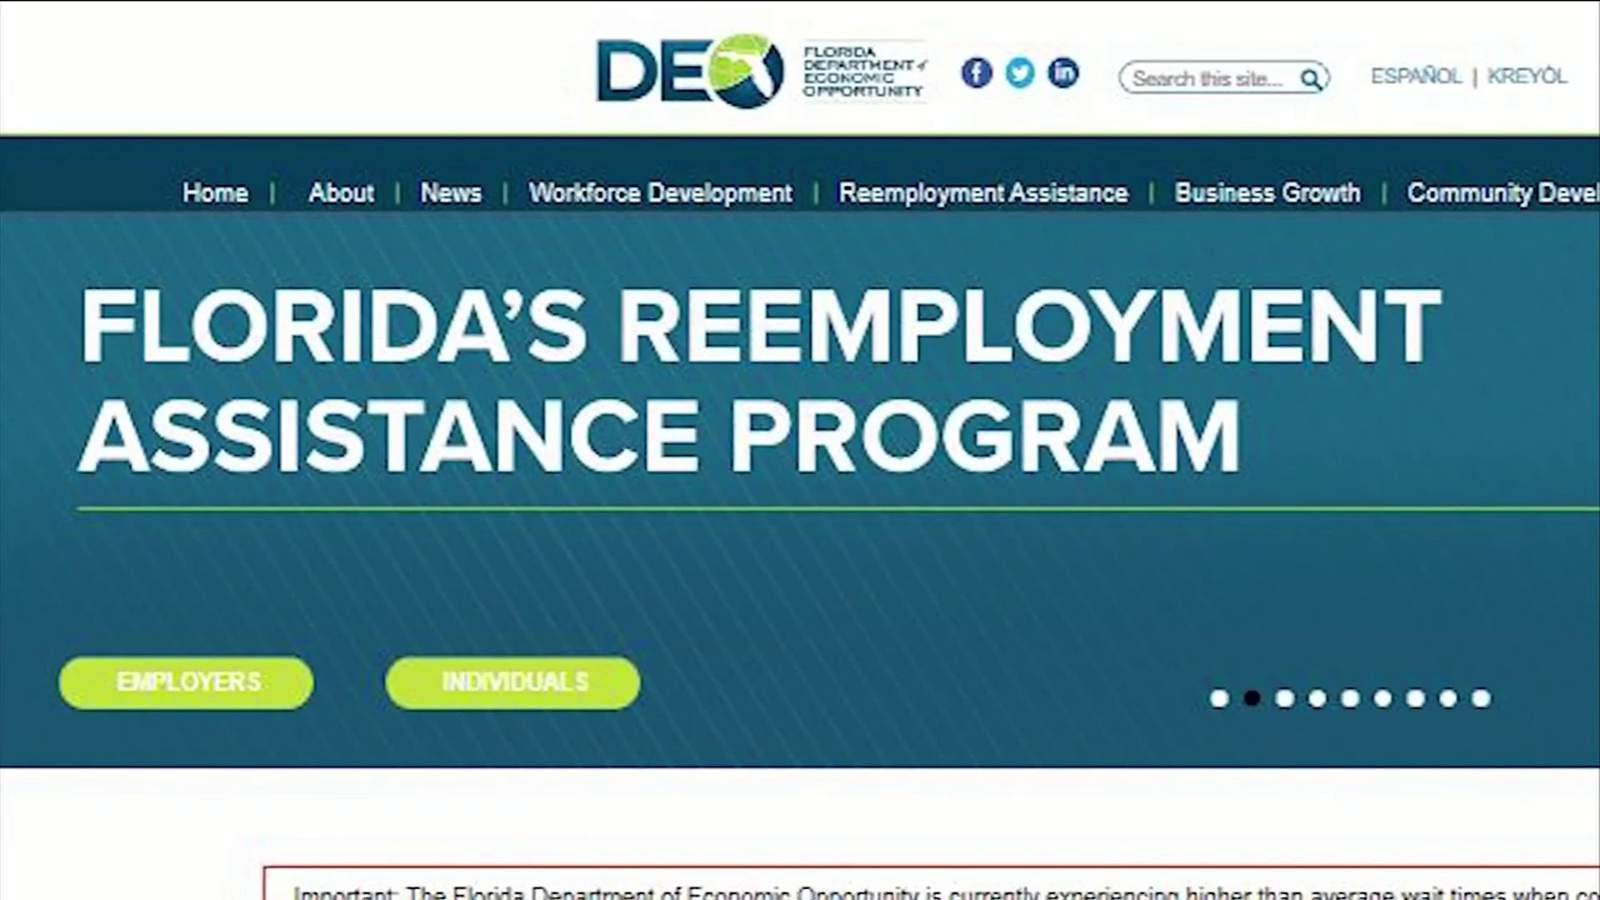 Data breach hits Florida unemployment system